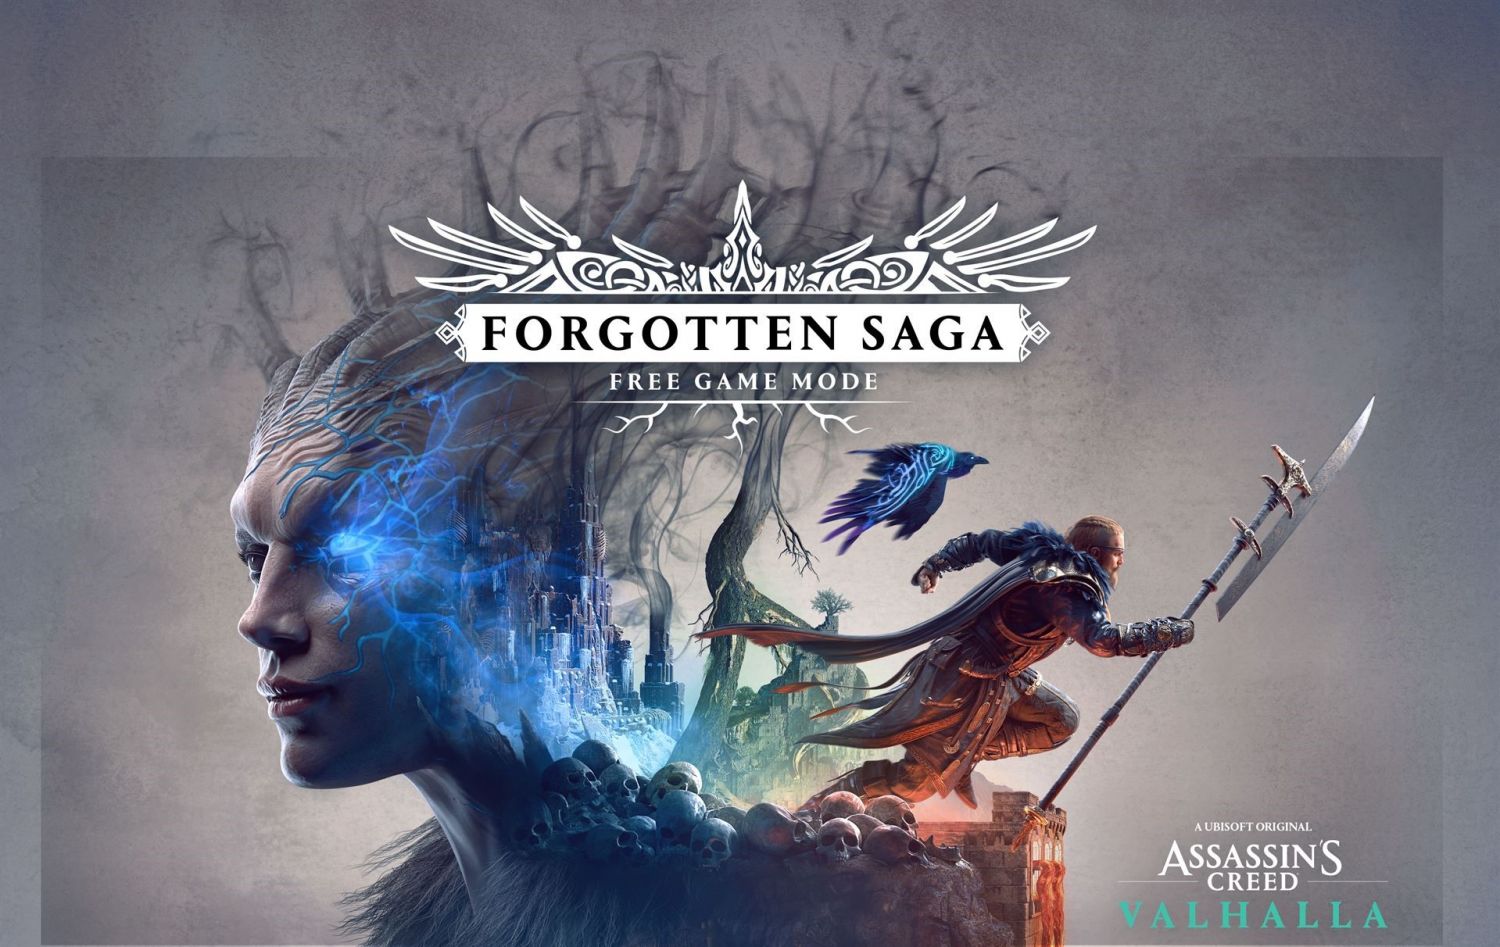 Assassin's Creed 15th Anniversary - The Forgotten Saga